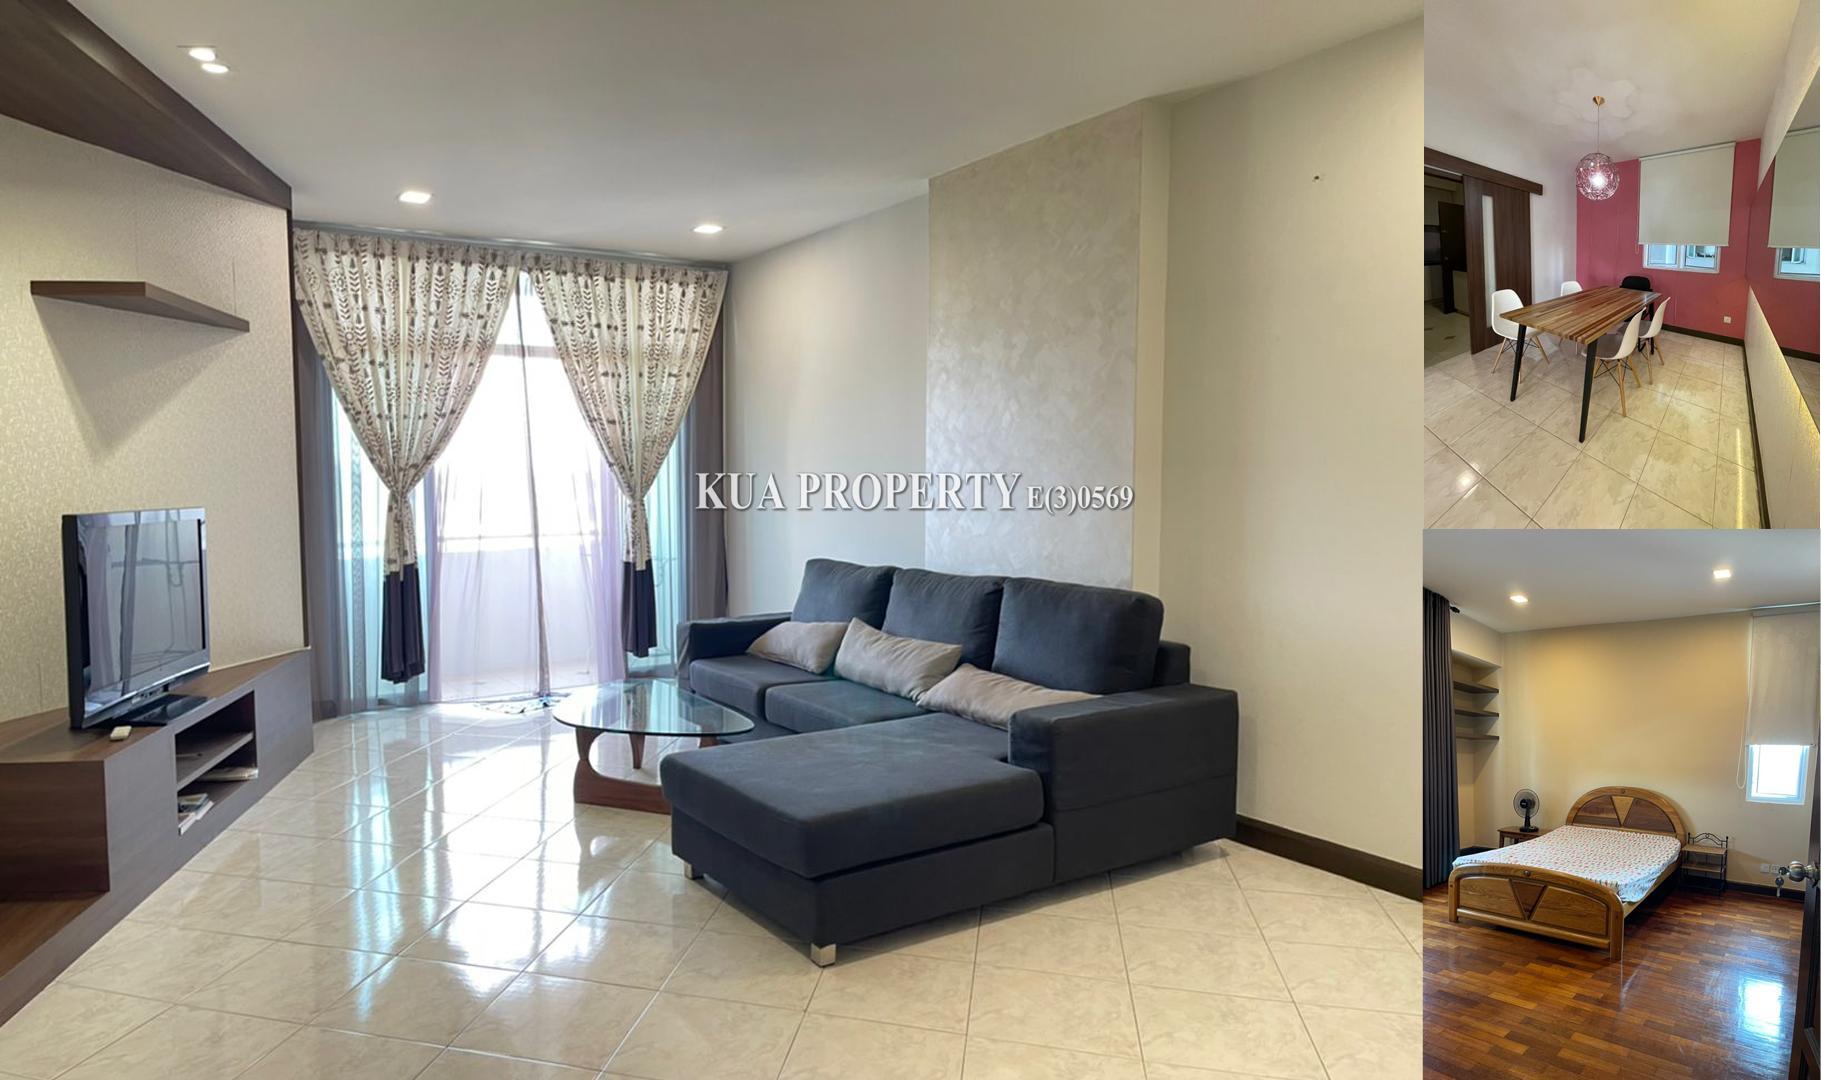 Level 5 Desa Pine apartment For Rent! Located at Tabuan Desa, Kuching